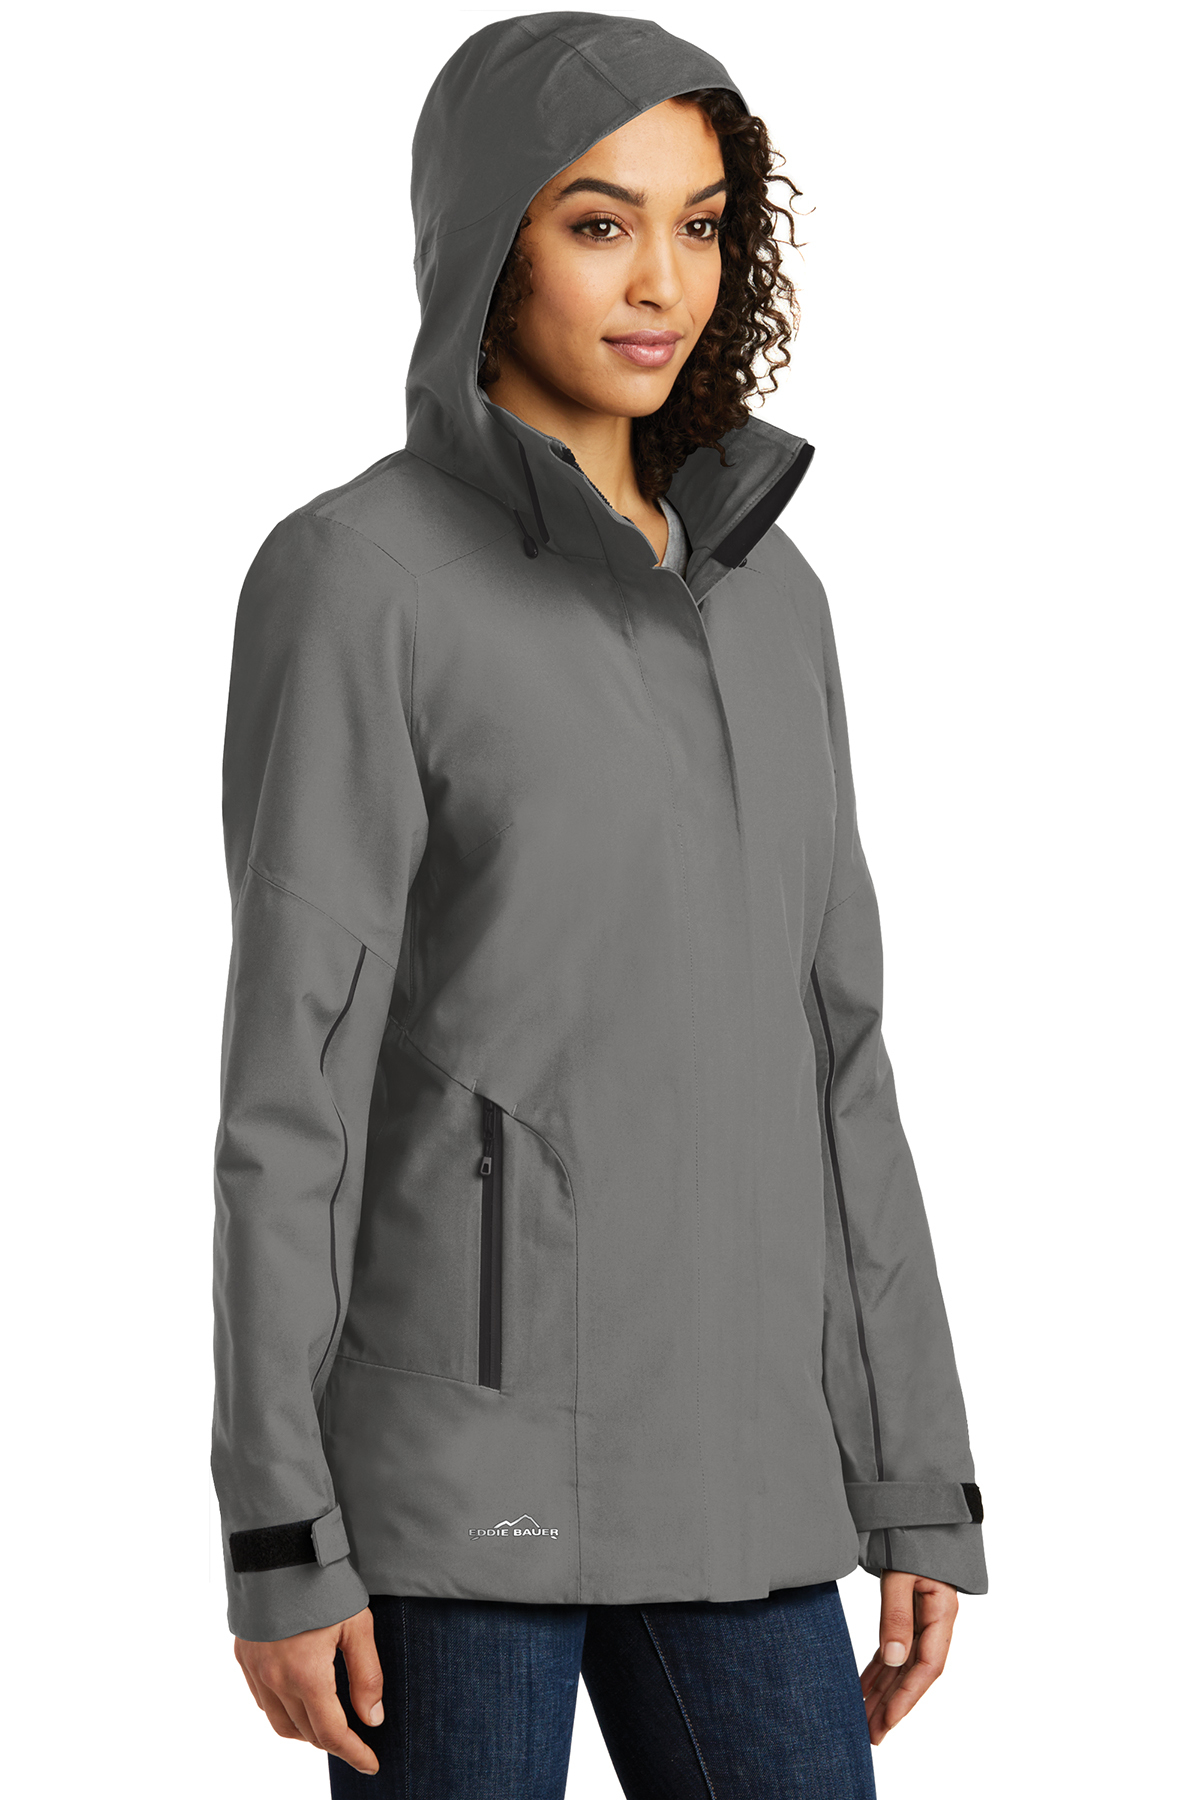 Eddie Bauer Ladies WeatherEdge Plus Insulated Jacket | Product